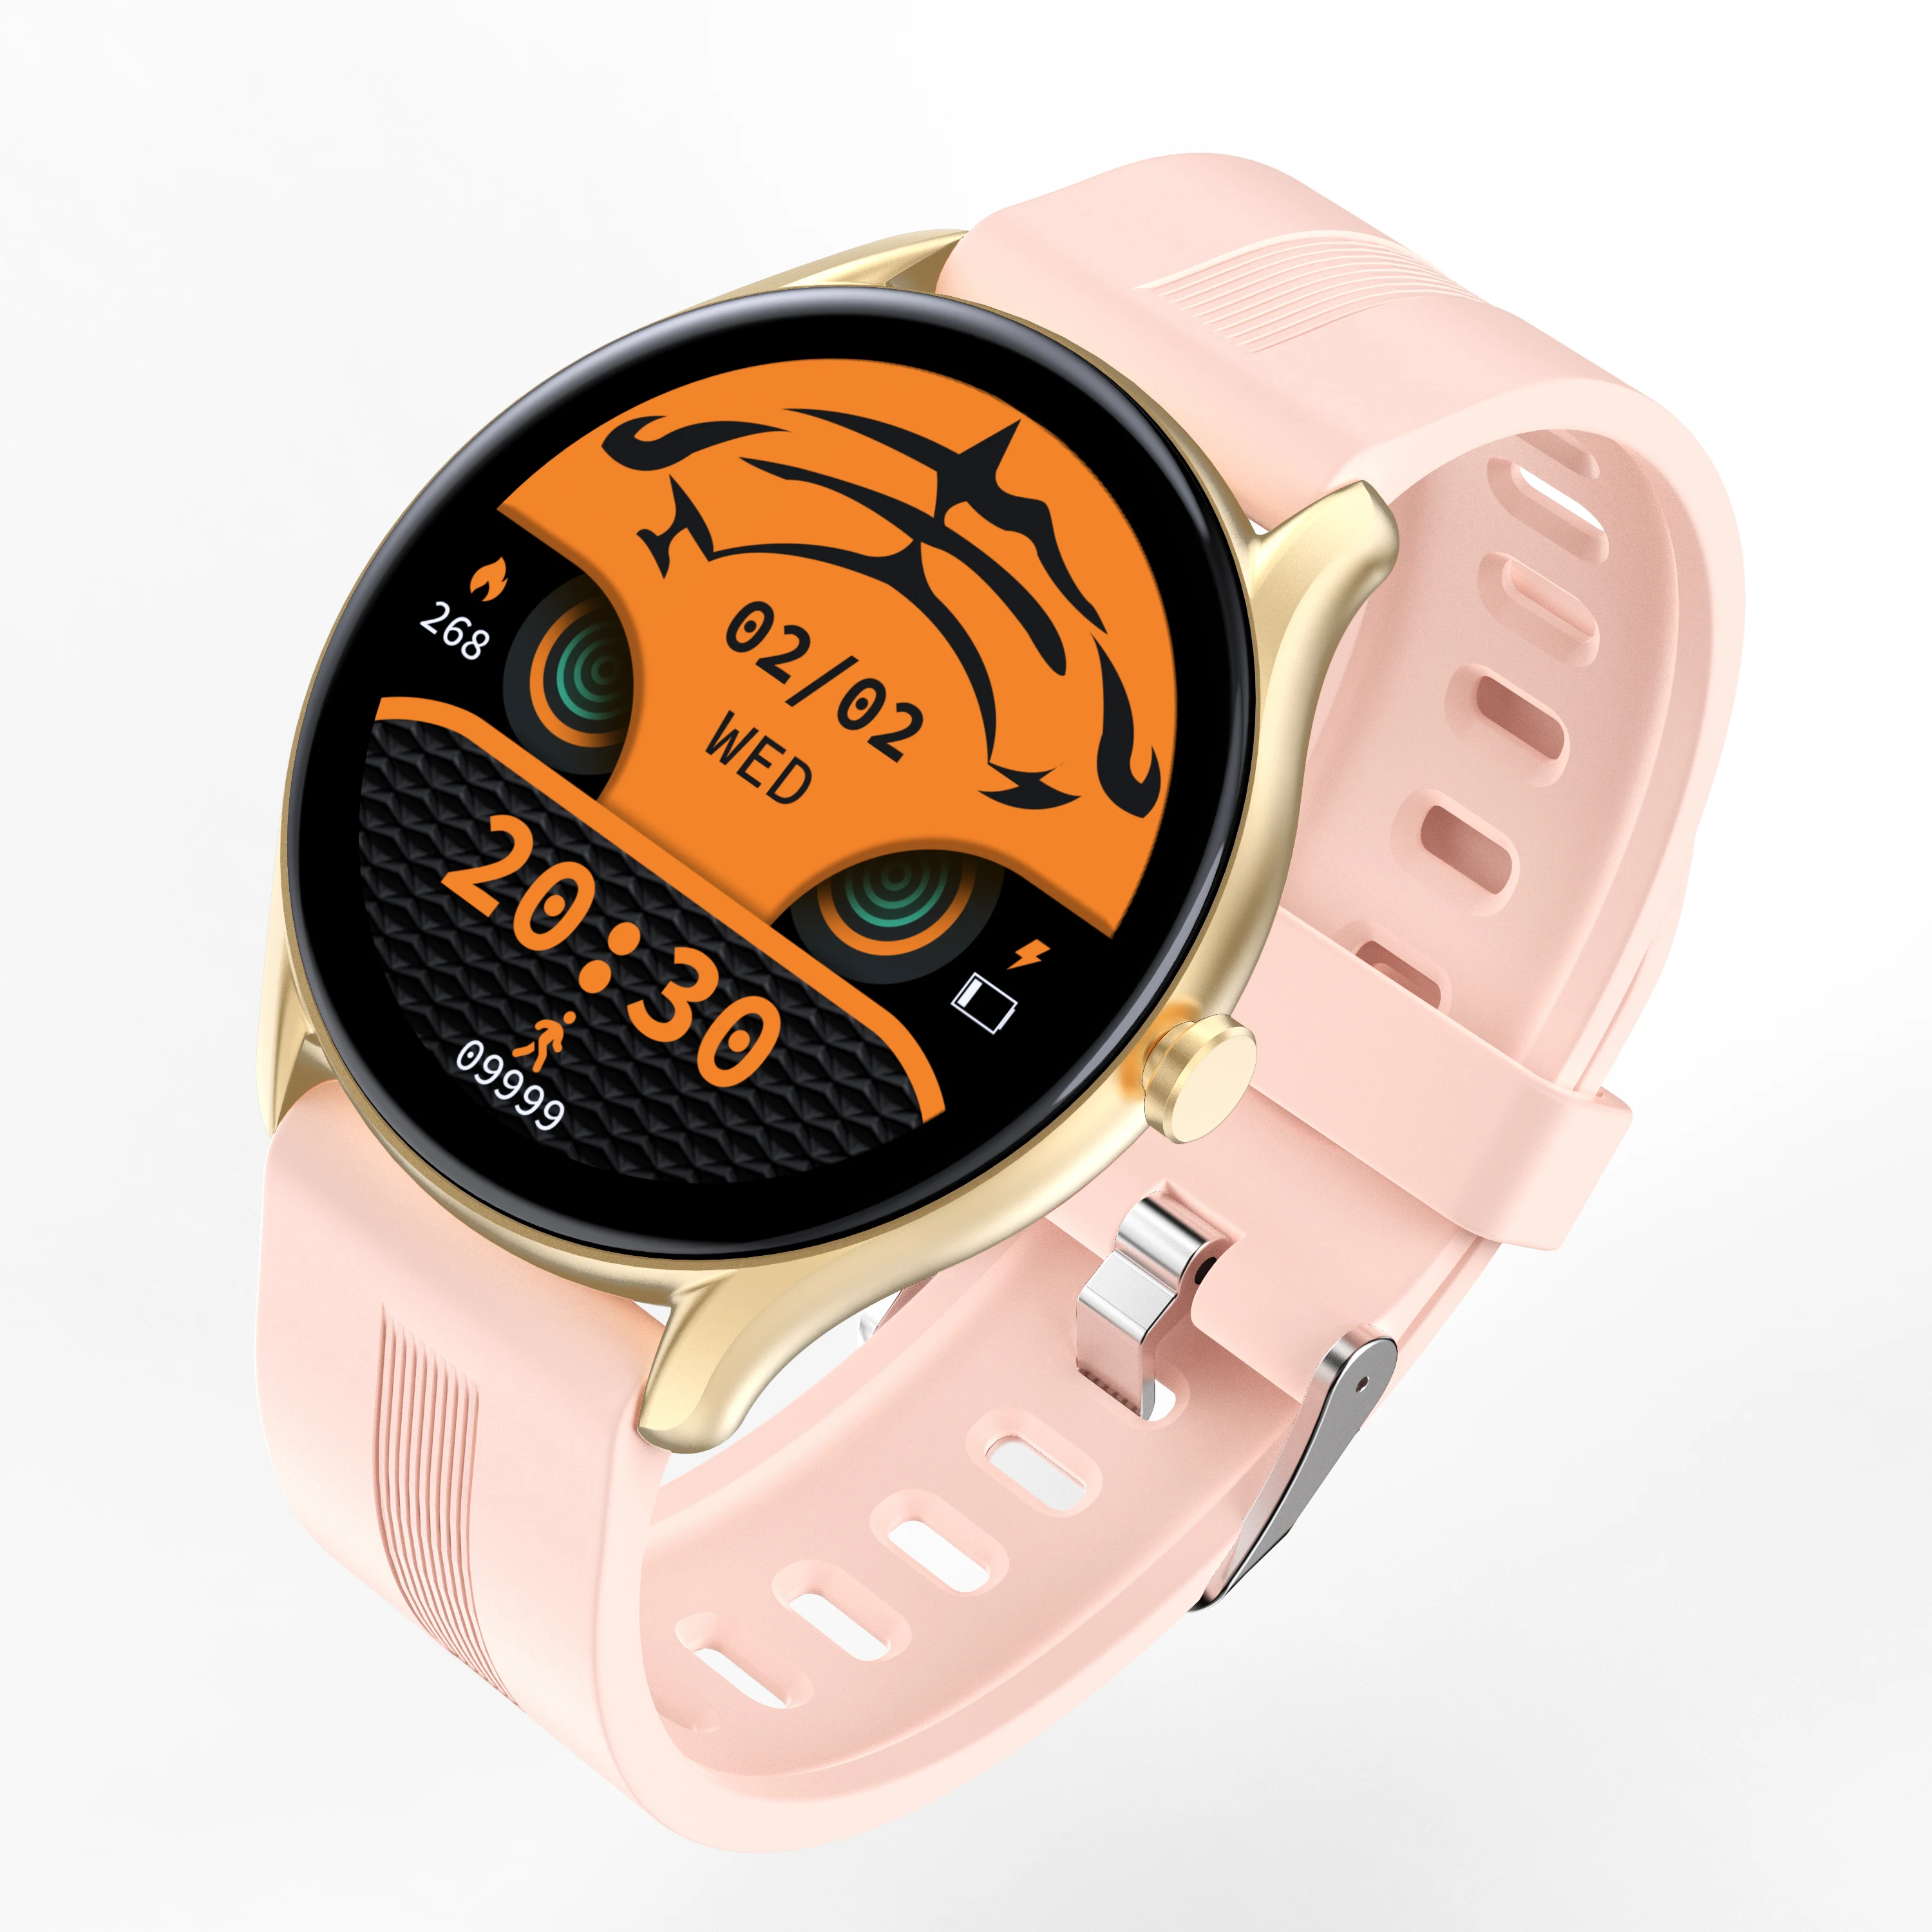 

2022 Hot Sell VL1 Smart Watch 1.32Inch Round Screen Touch IP68 Waterproof Call Reminder Sport Smart Watch for Men Women, Pink, black, gold